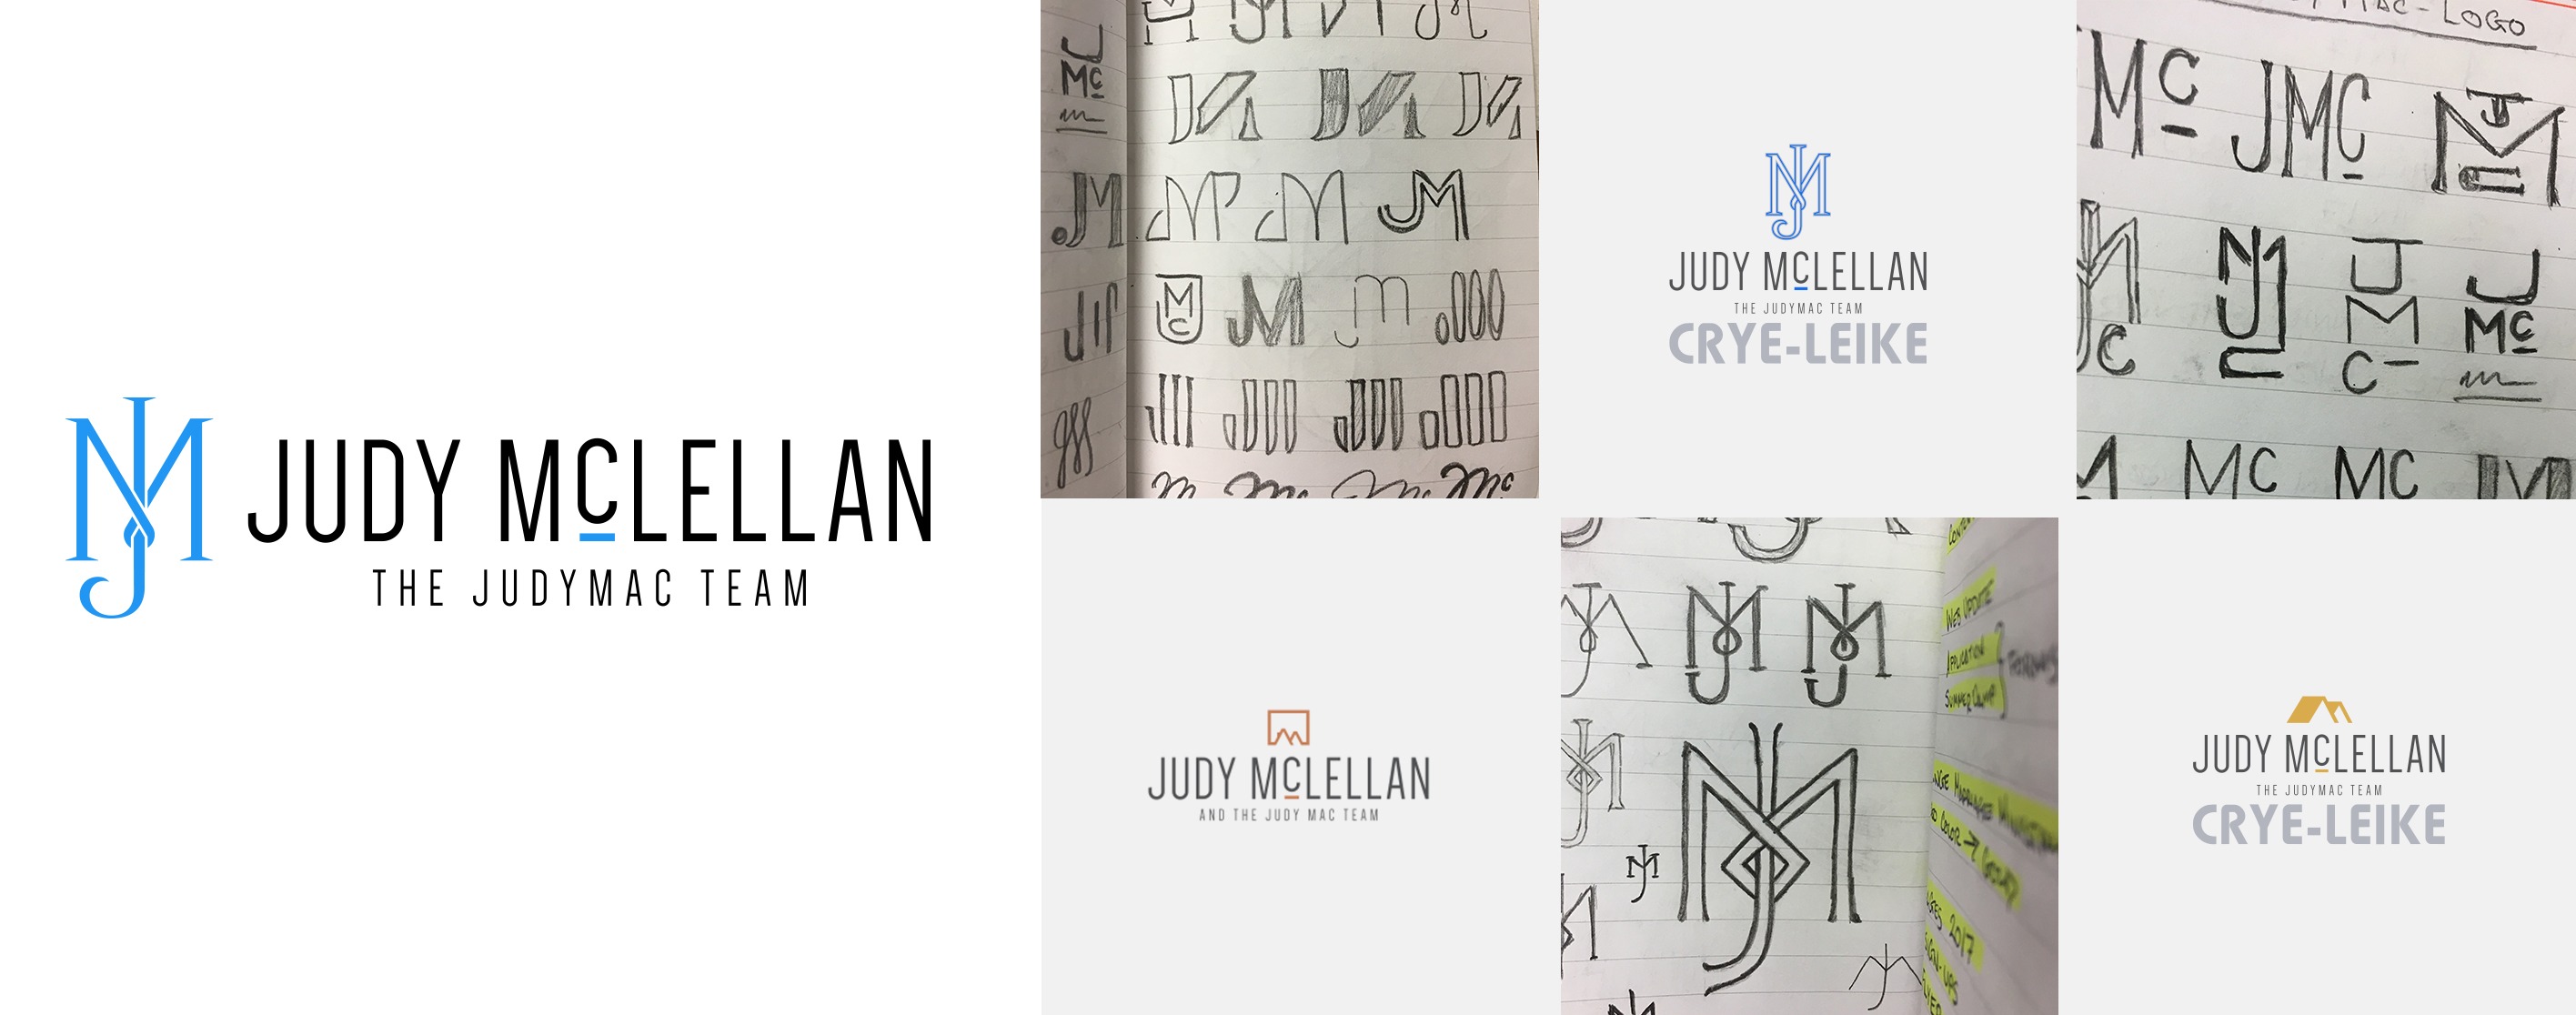 Judy McLellan Branding Elements